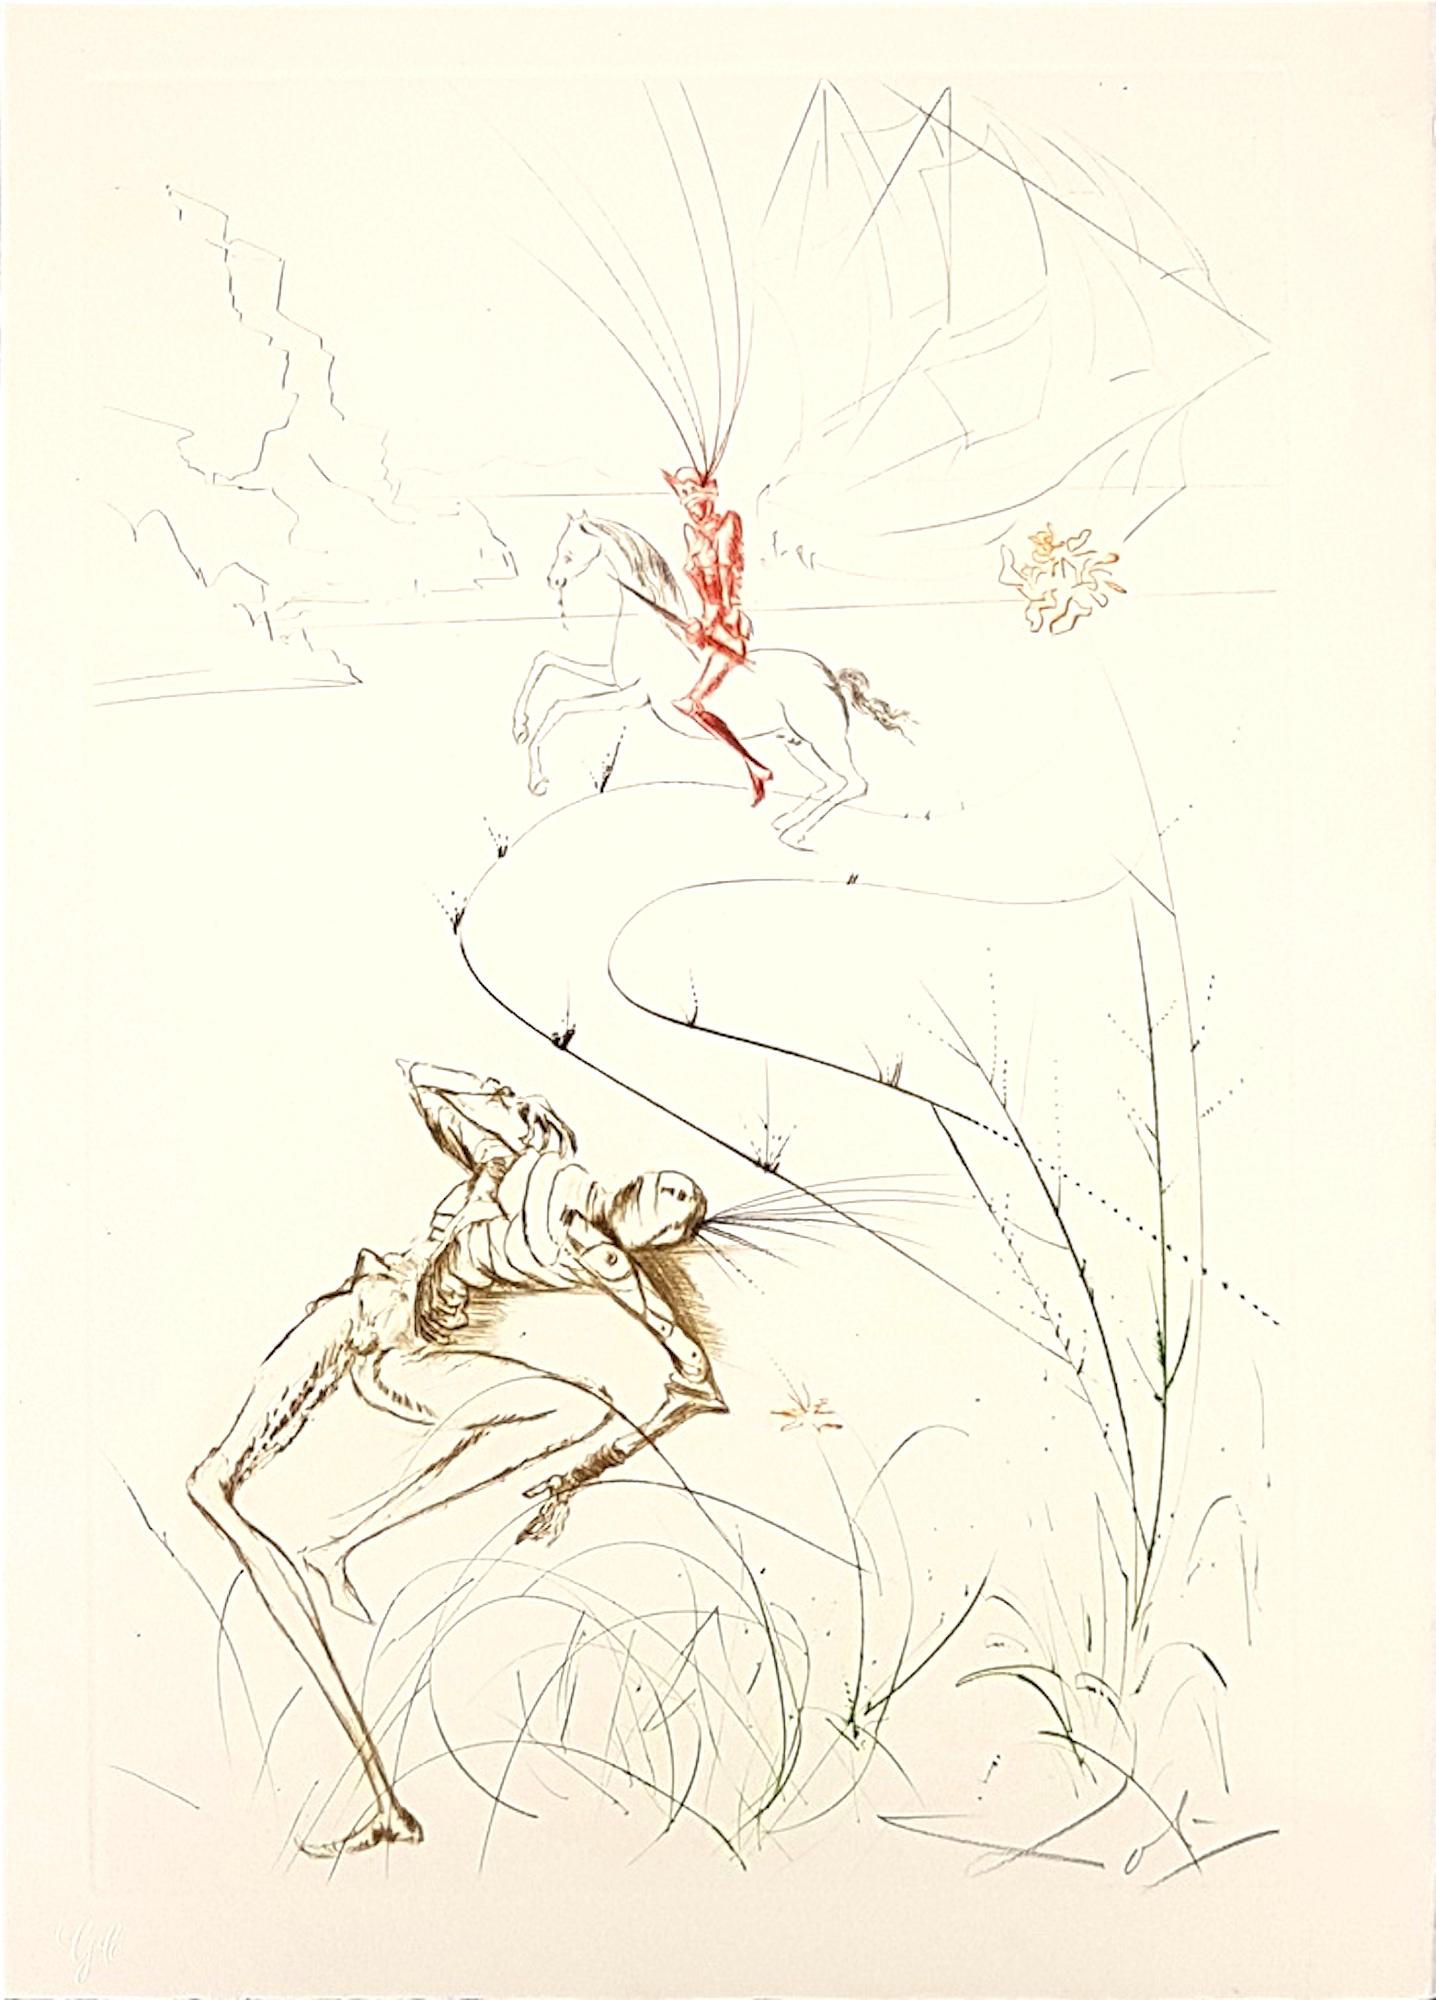 Salvador Dalí Print - Derner Combat de Tristan - Original Etching by S. Dalì - 1969